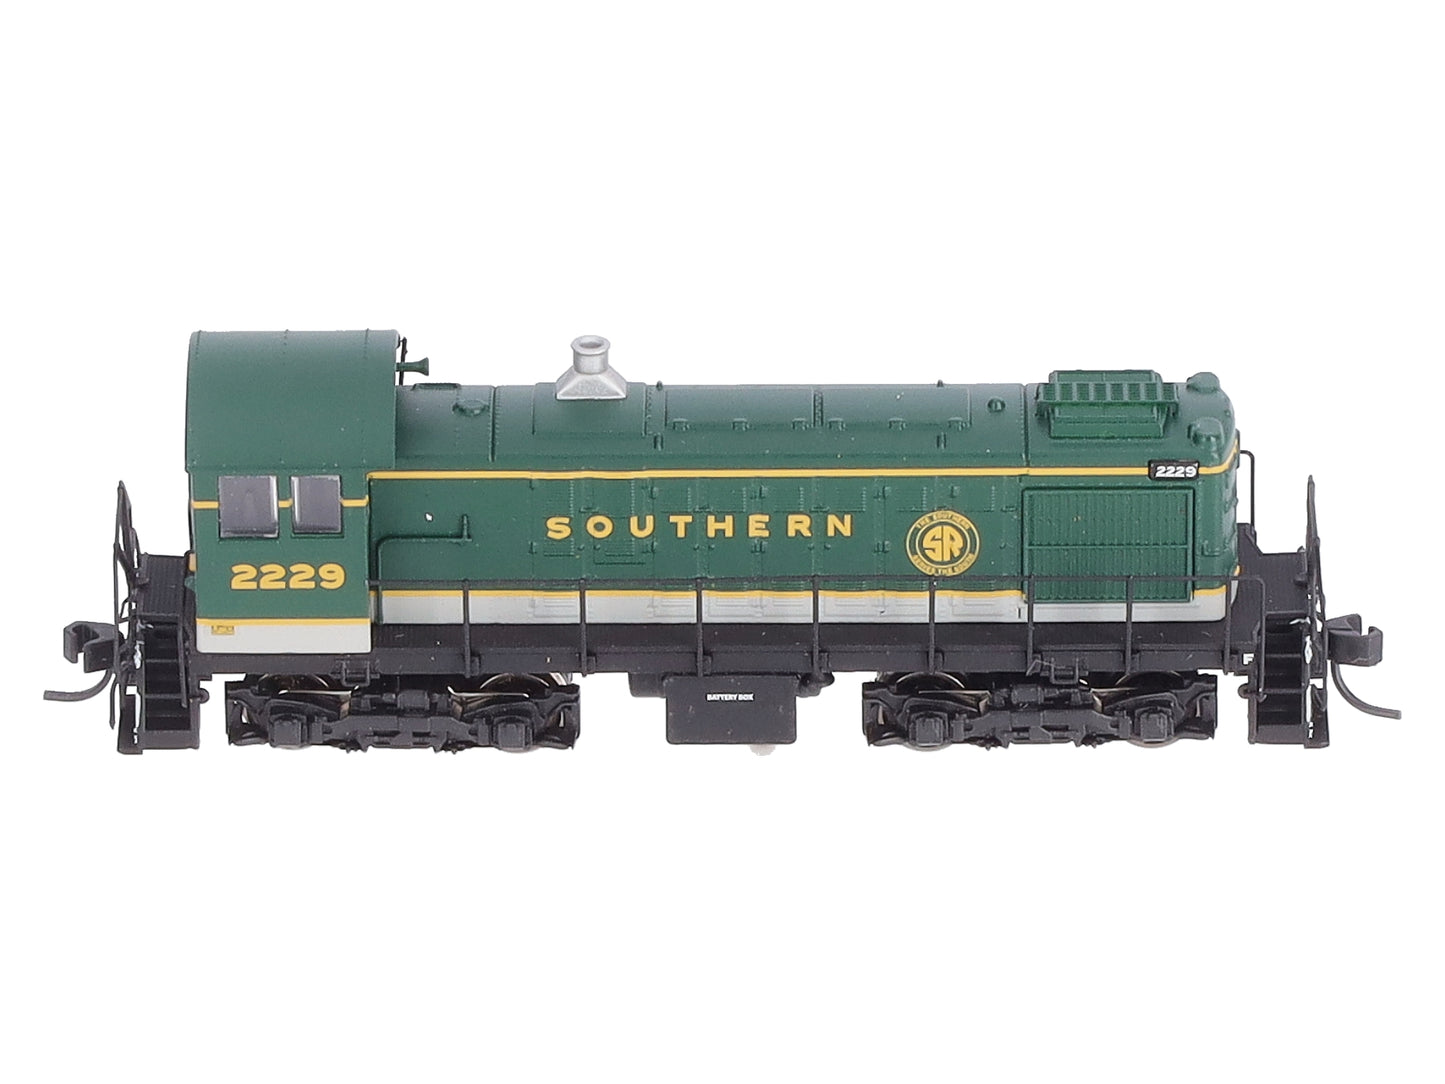 Atlas 40000711 N Southern Railway S2 Locomotive #2229 EX/Box